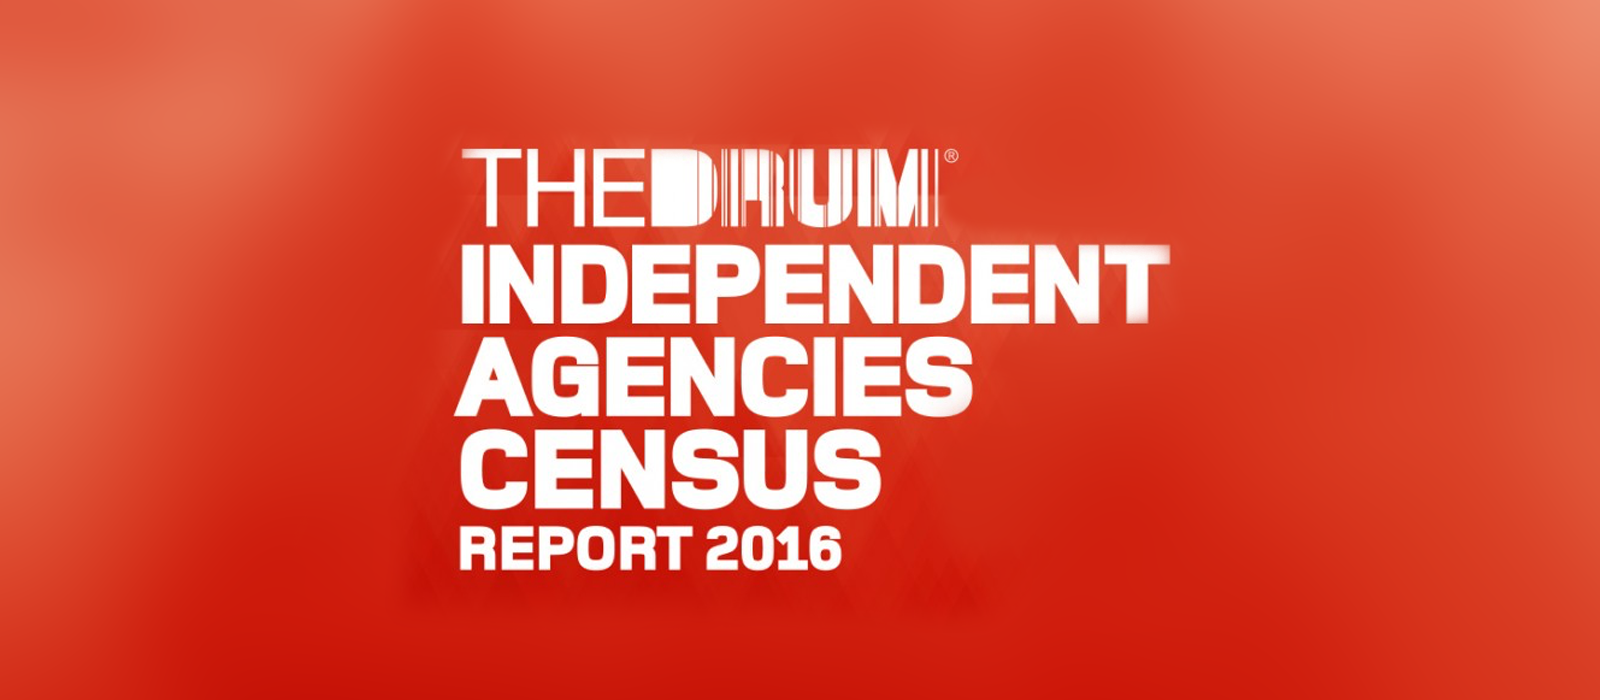 Independent-Agencies-Census-hero-image